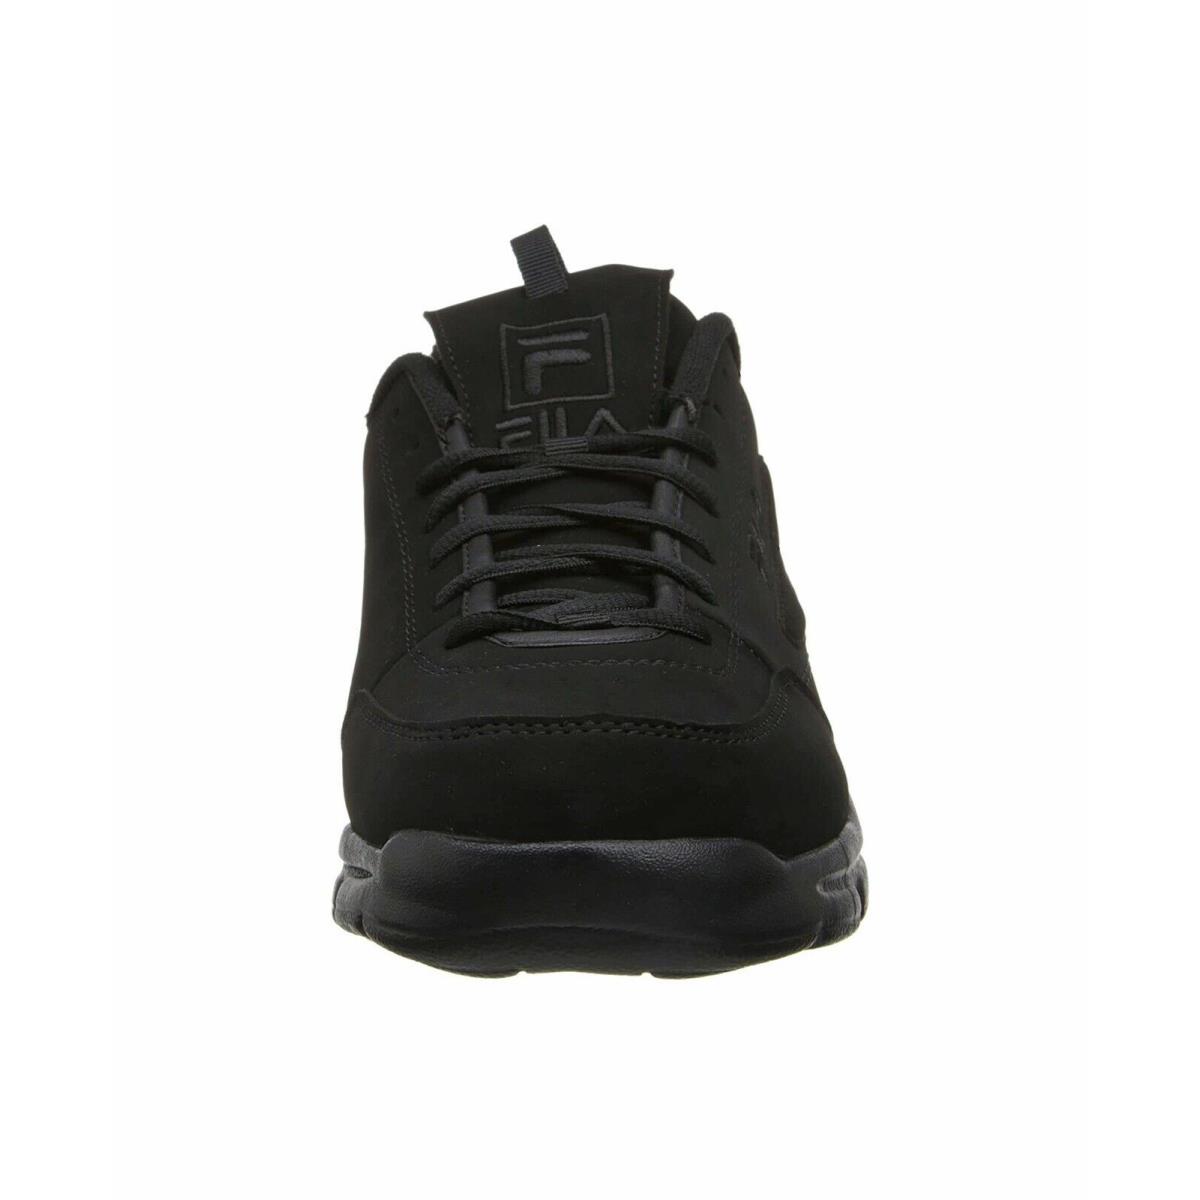 Fila shoes Disruptor - Black 1